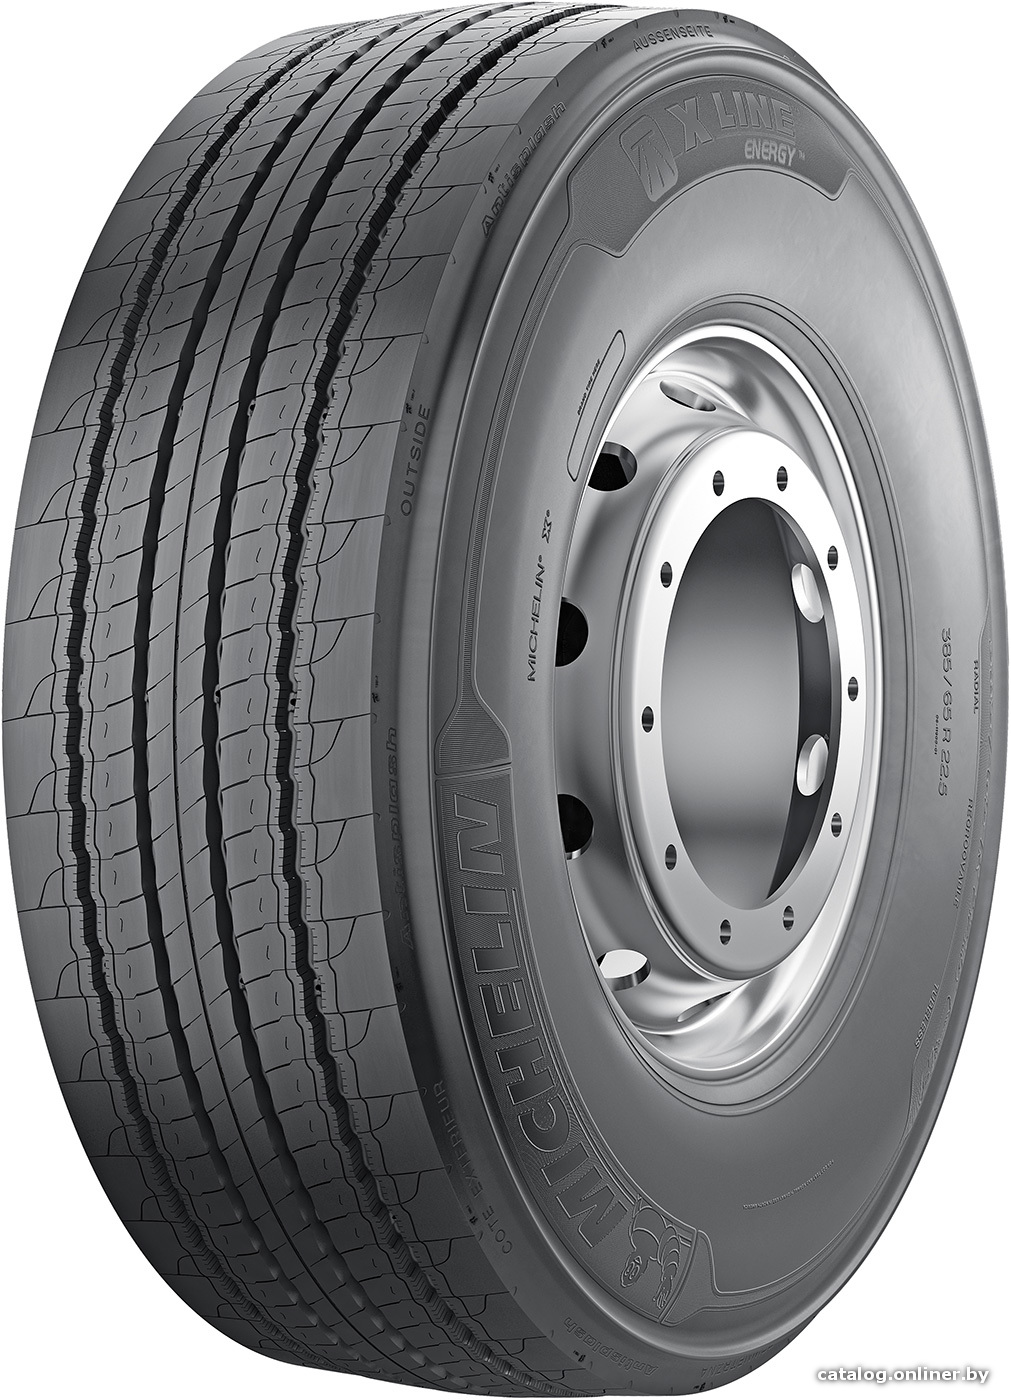 Автомобильные шины Michelin X Line Energy F 385/65R22.5 160K